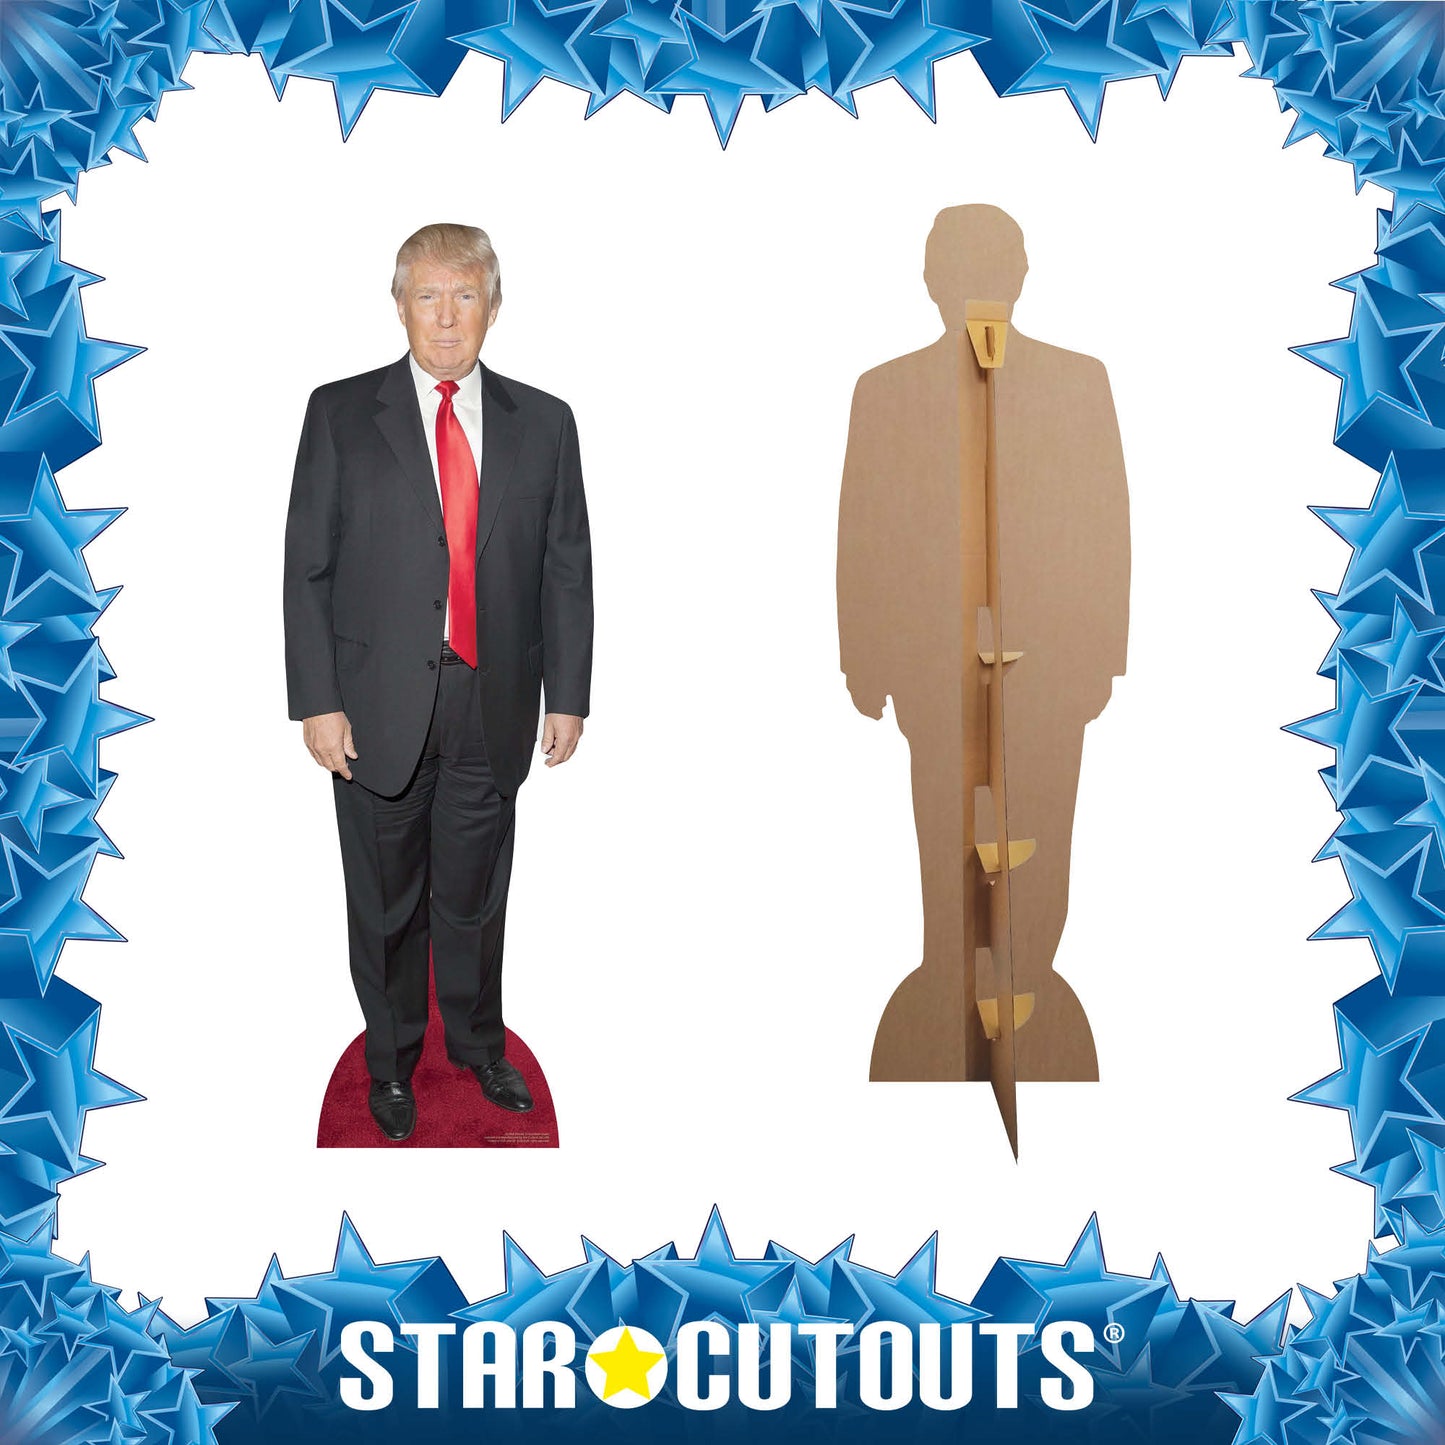 Donald Trump Red Carpet Cardboard Cutout Politician